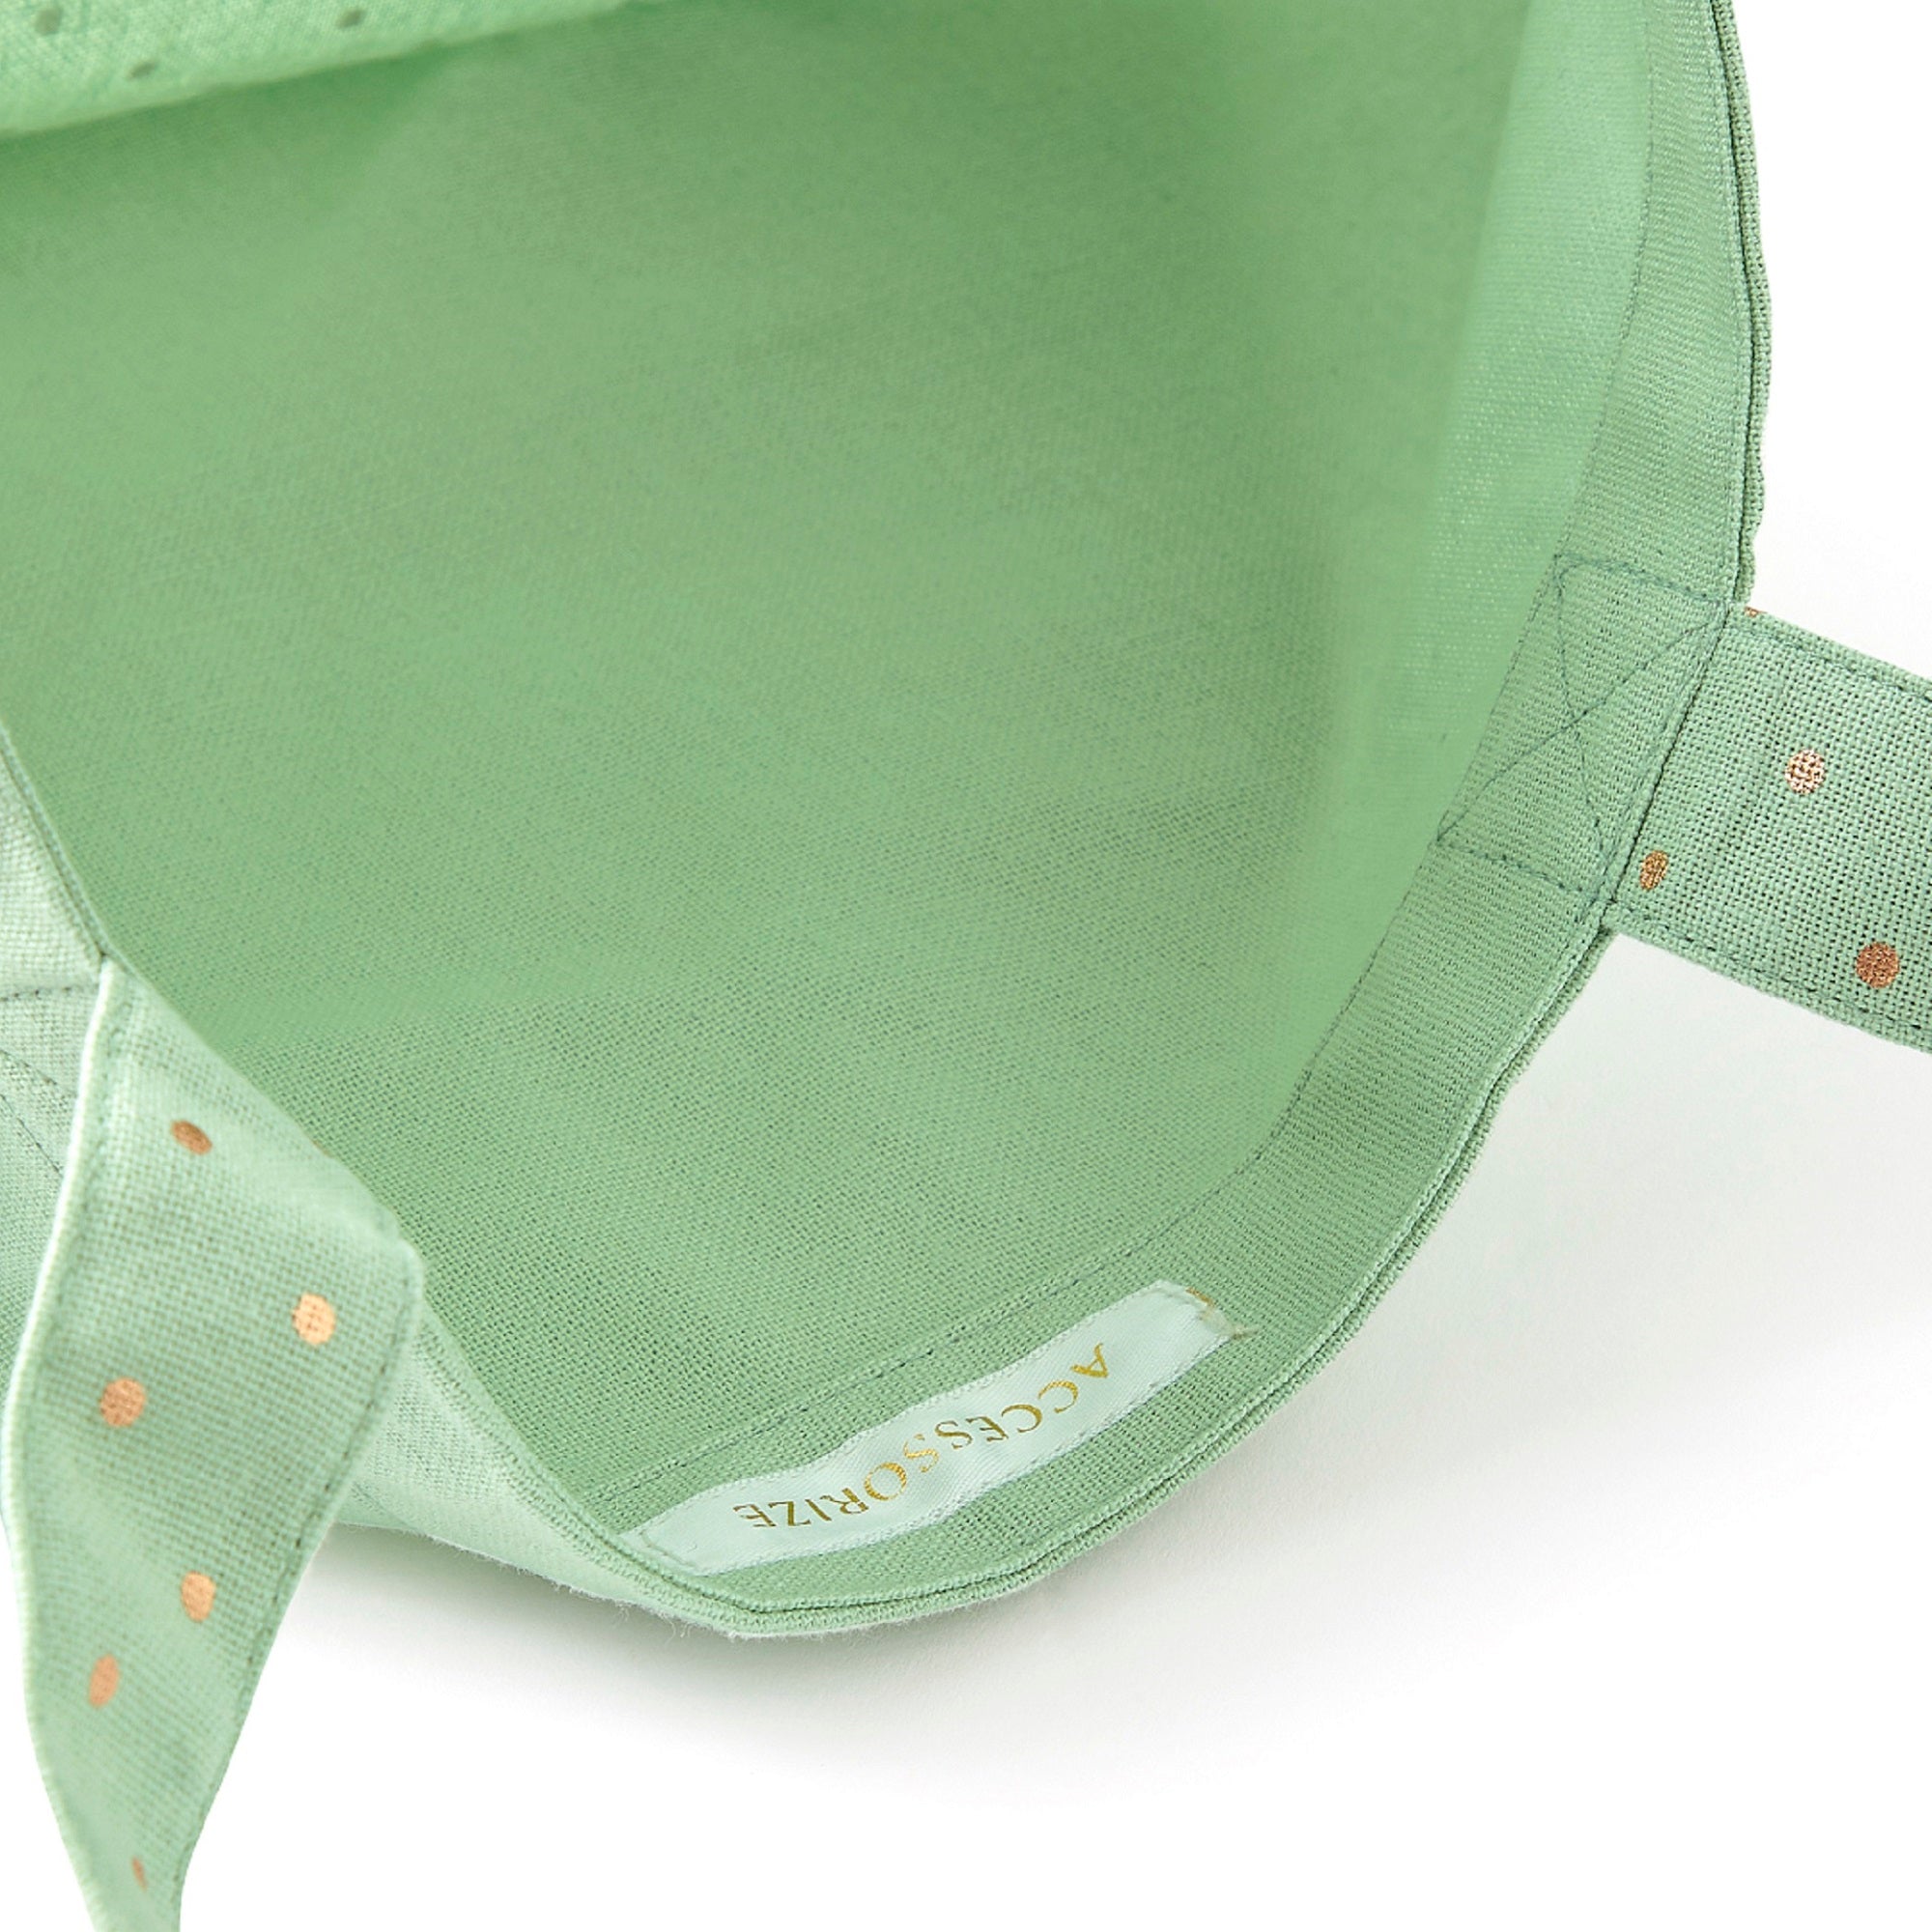 Accessorize London Women's Cotton Green Printed Shopper Bag